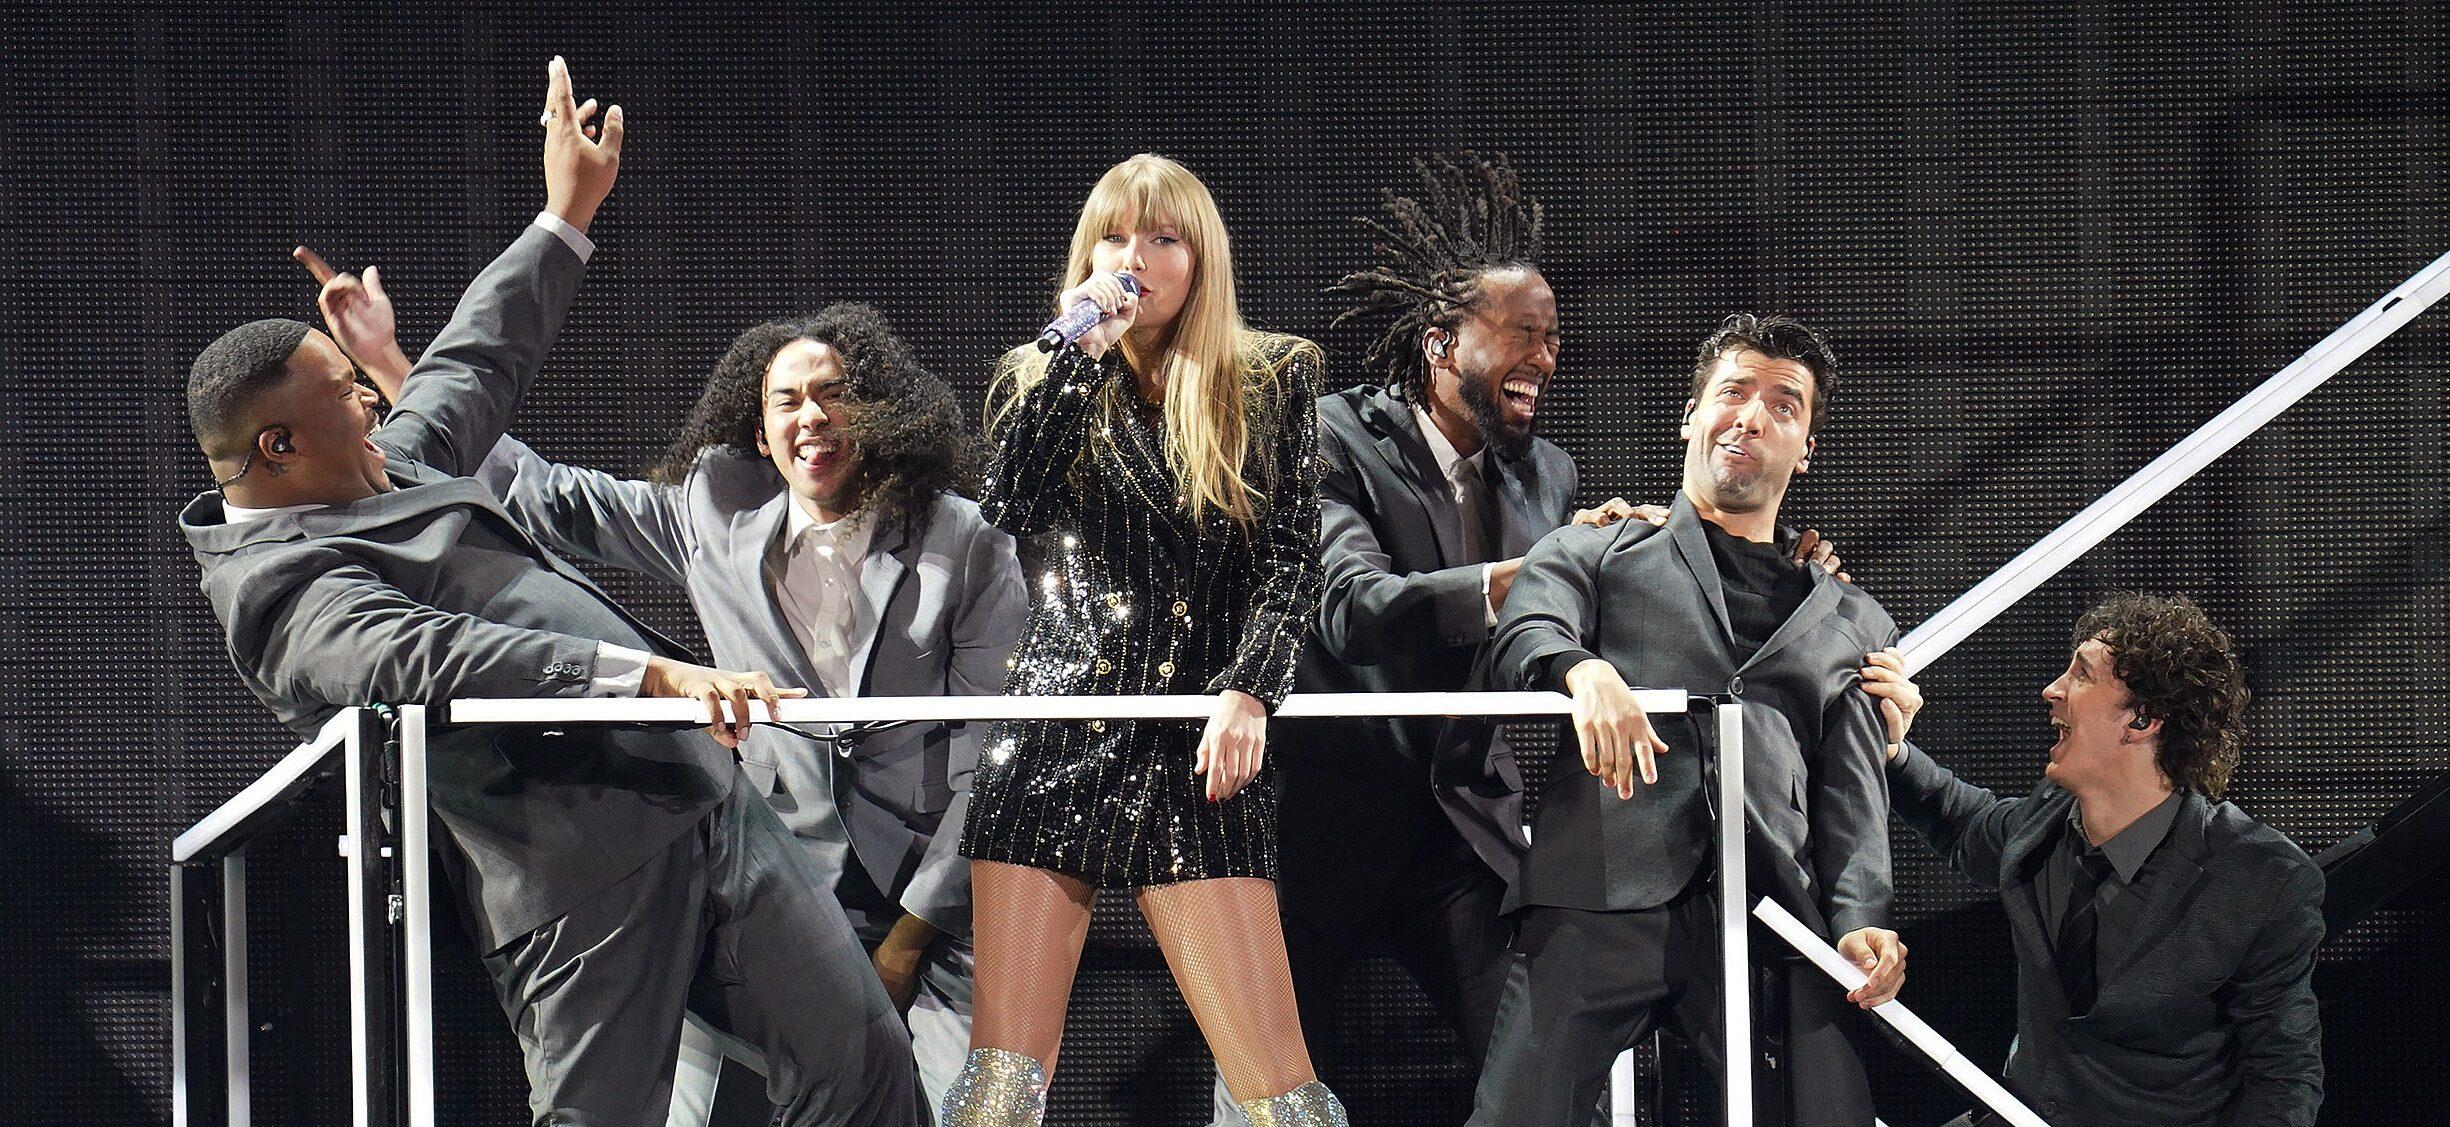 Taylor Swift performs in Arlington Texas